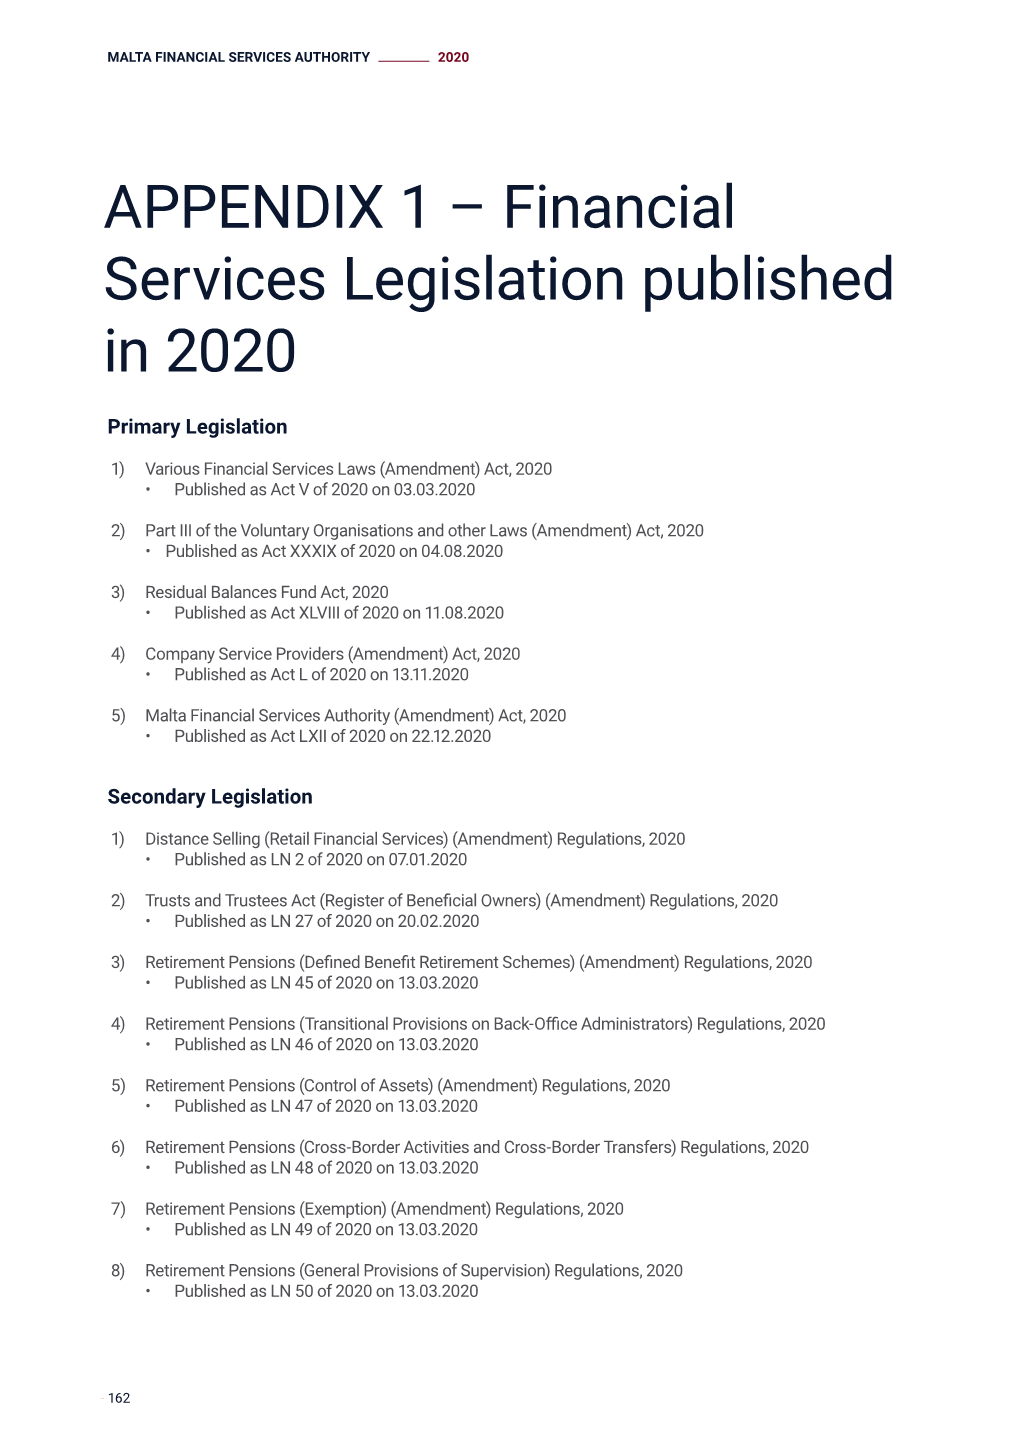 APPENDIX 1 – Financial Services Legislation Published in 2020